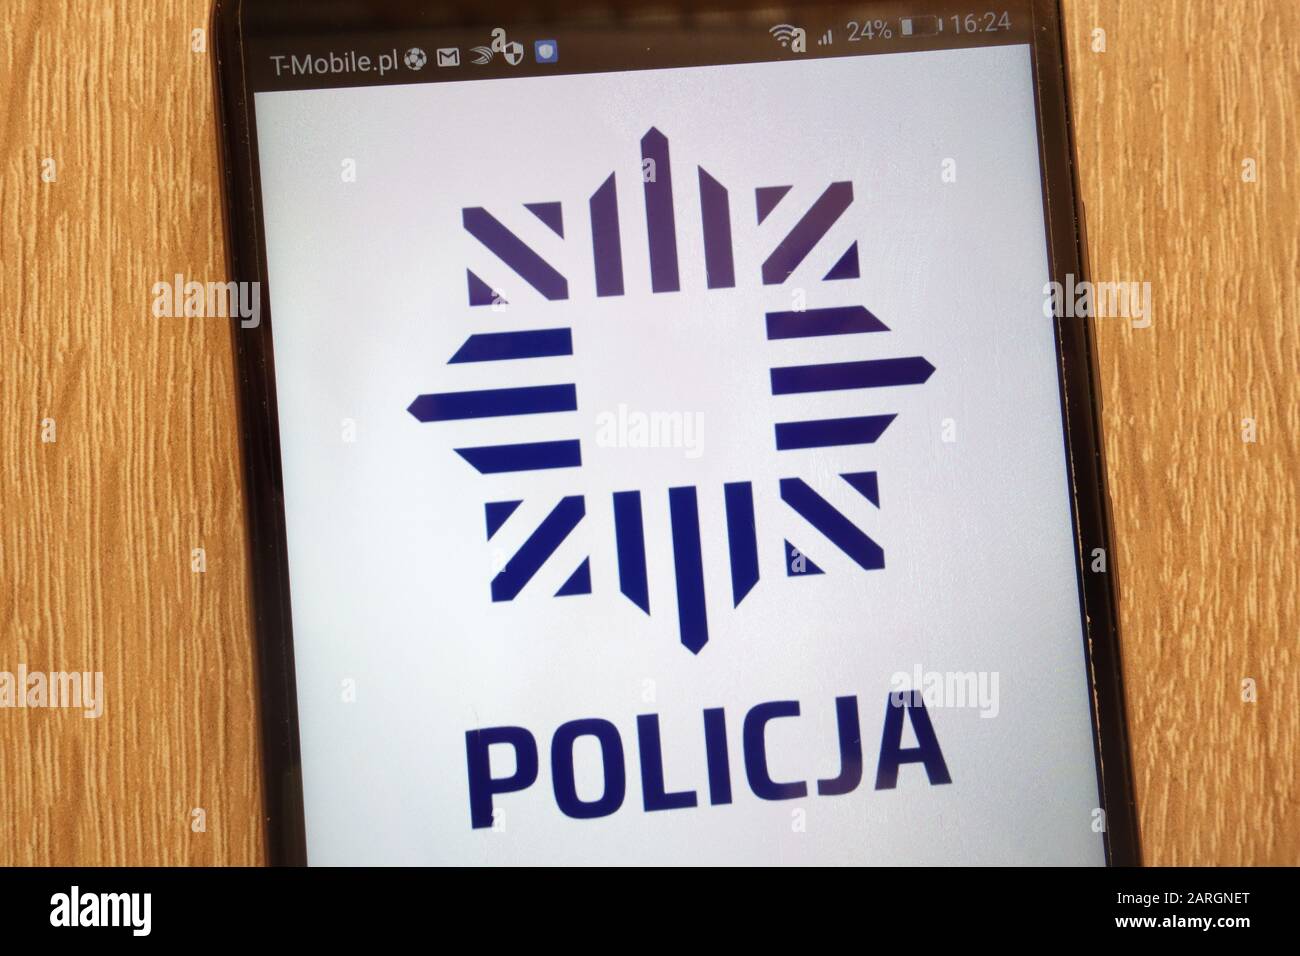 Policja (Polish police) logo displayed on a modern smartphone Stock Photo